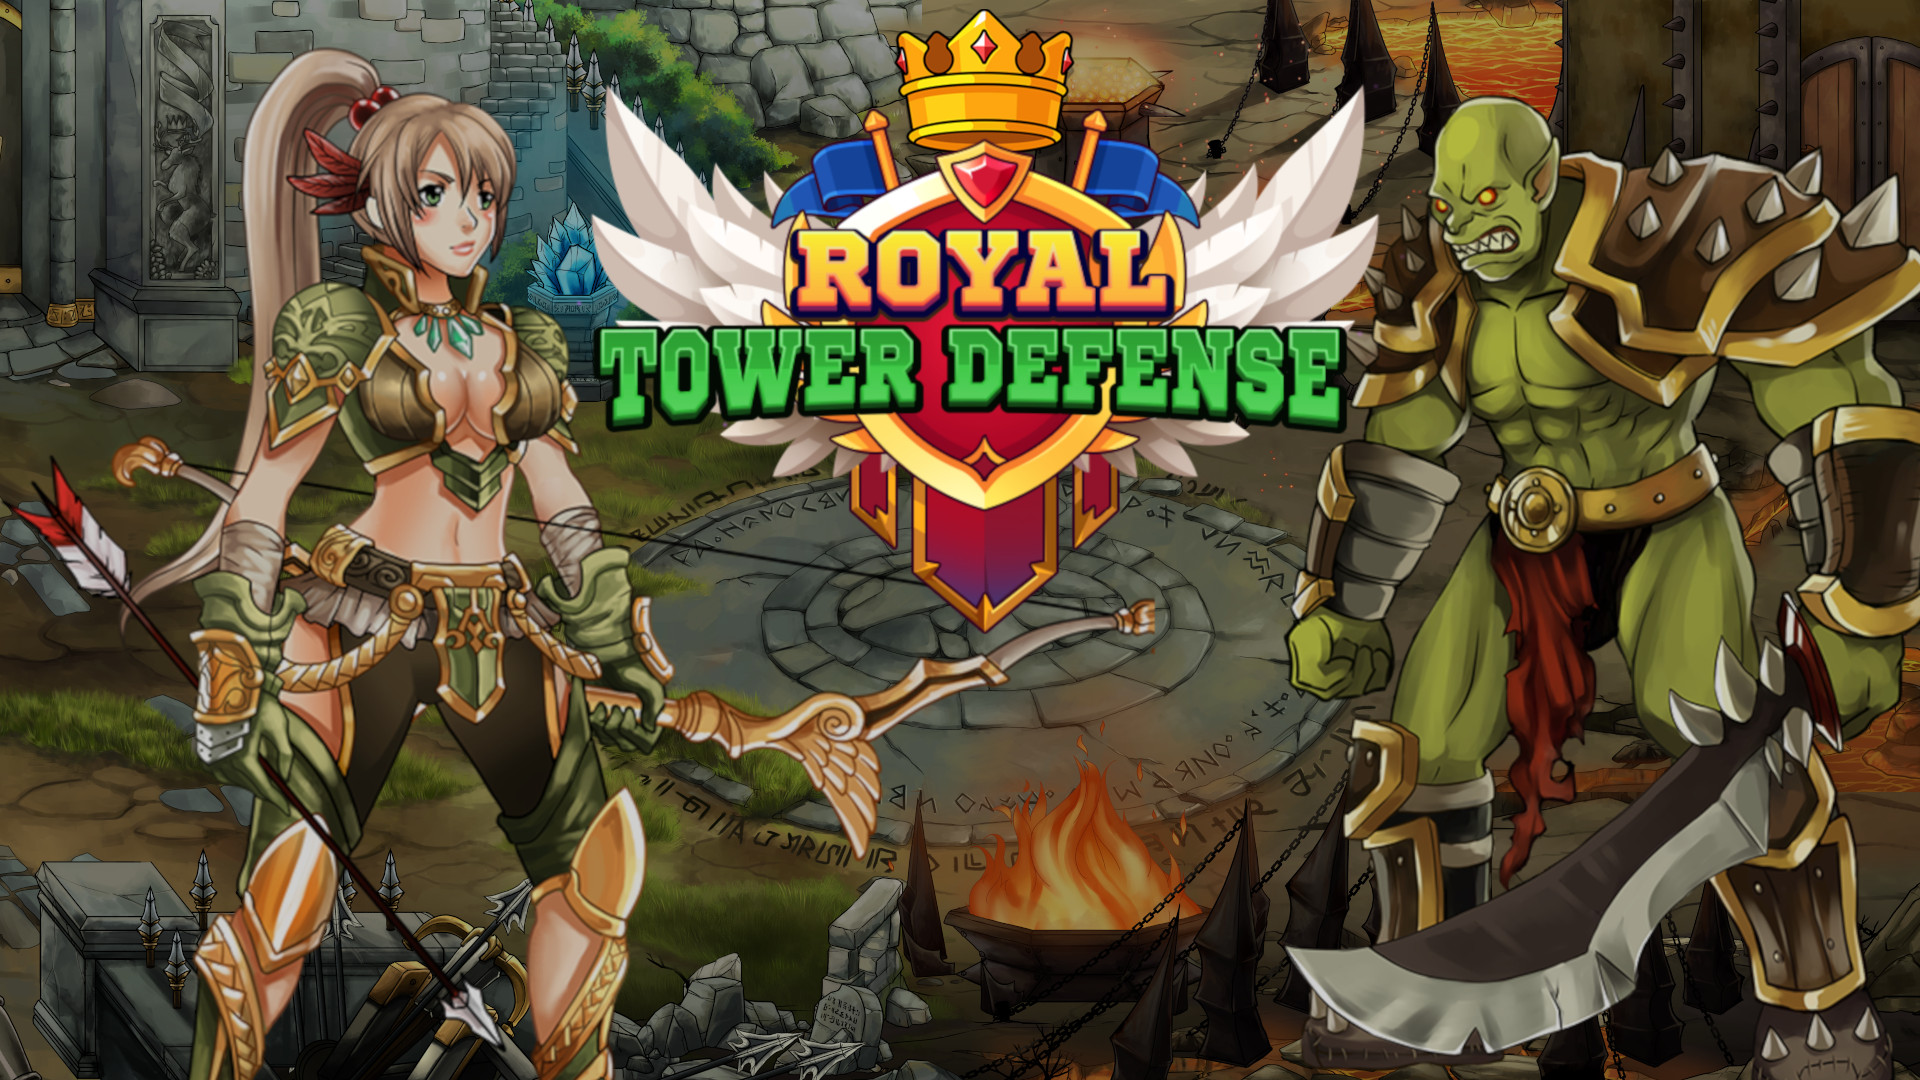 Fantasy Tower Defense for Nintendo Switch - Nintendo Official Site